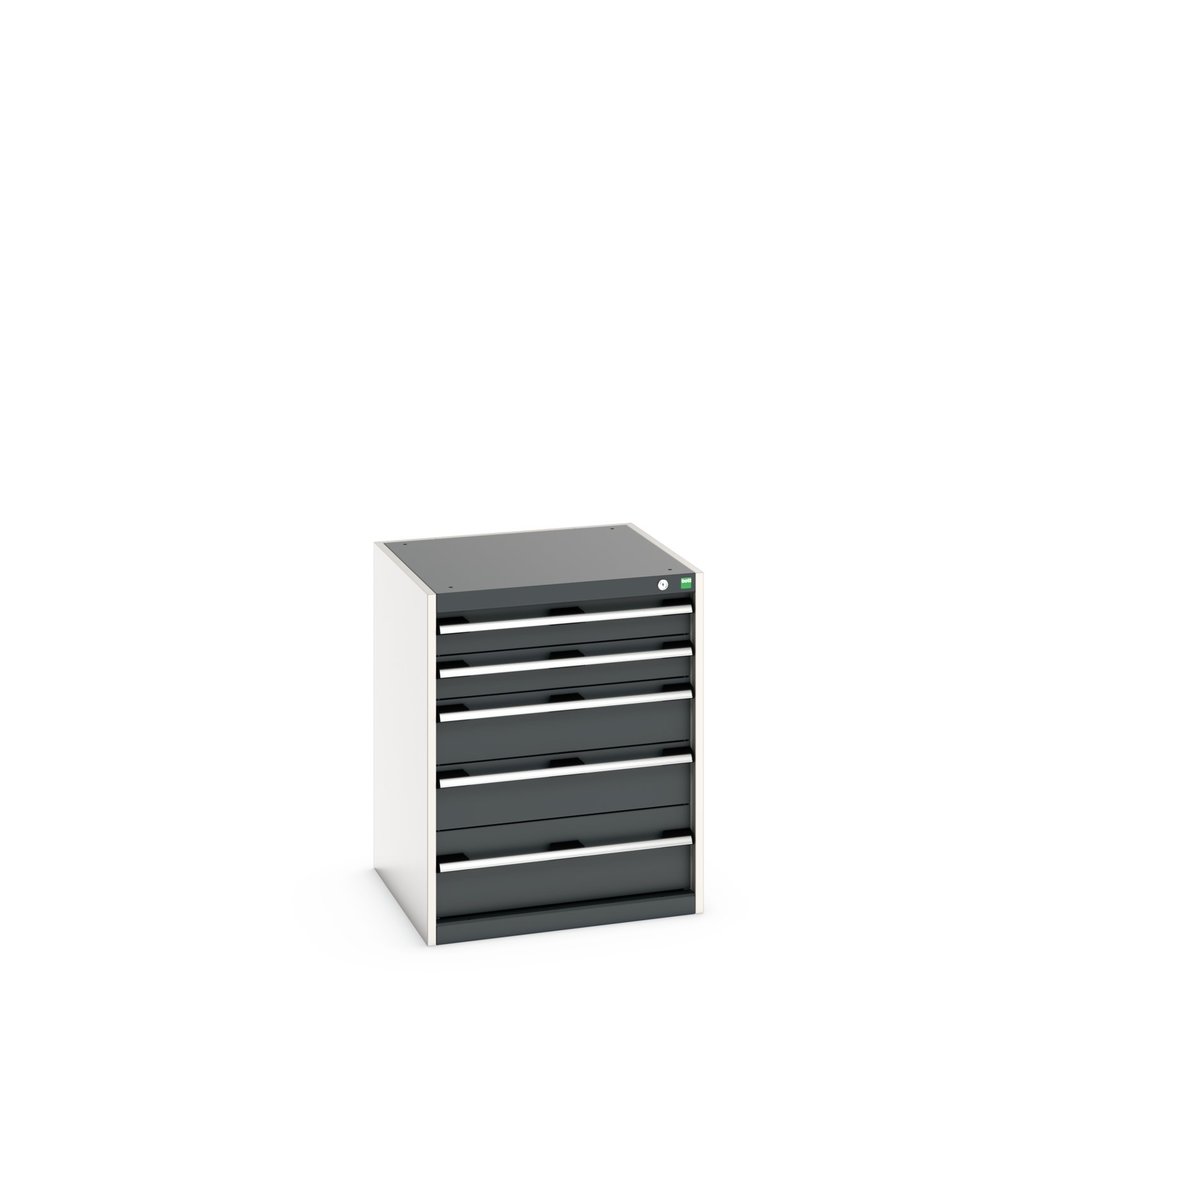 40019035. - cubio drawer cabinet